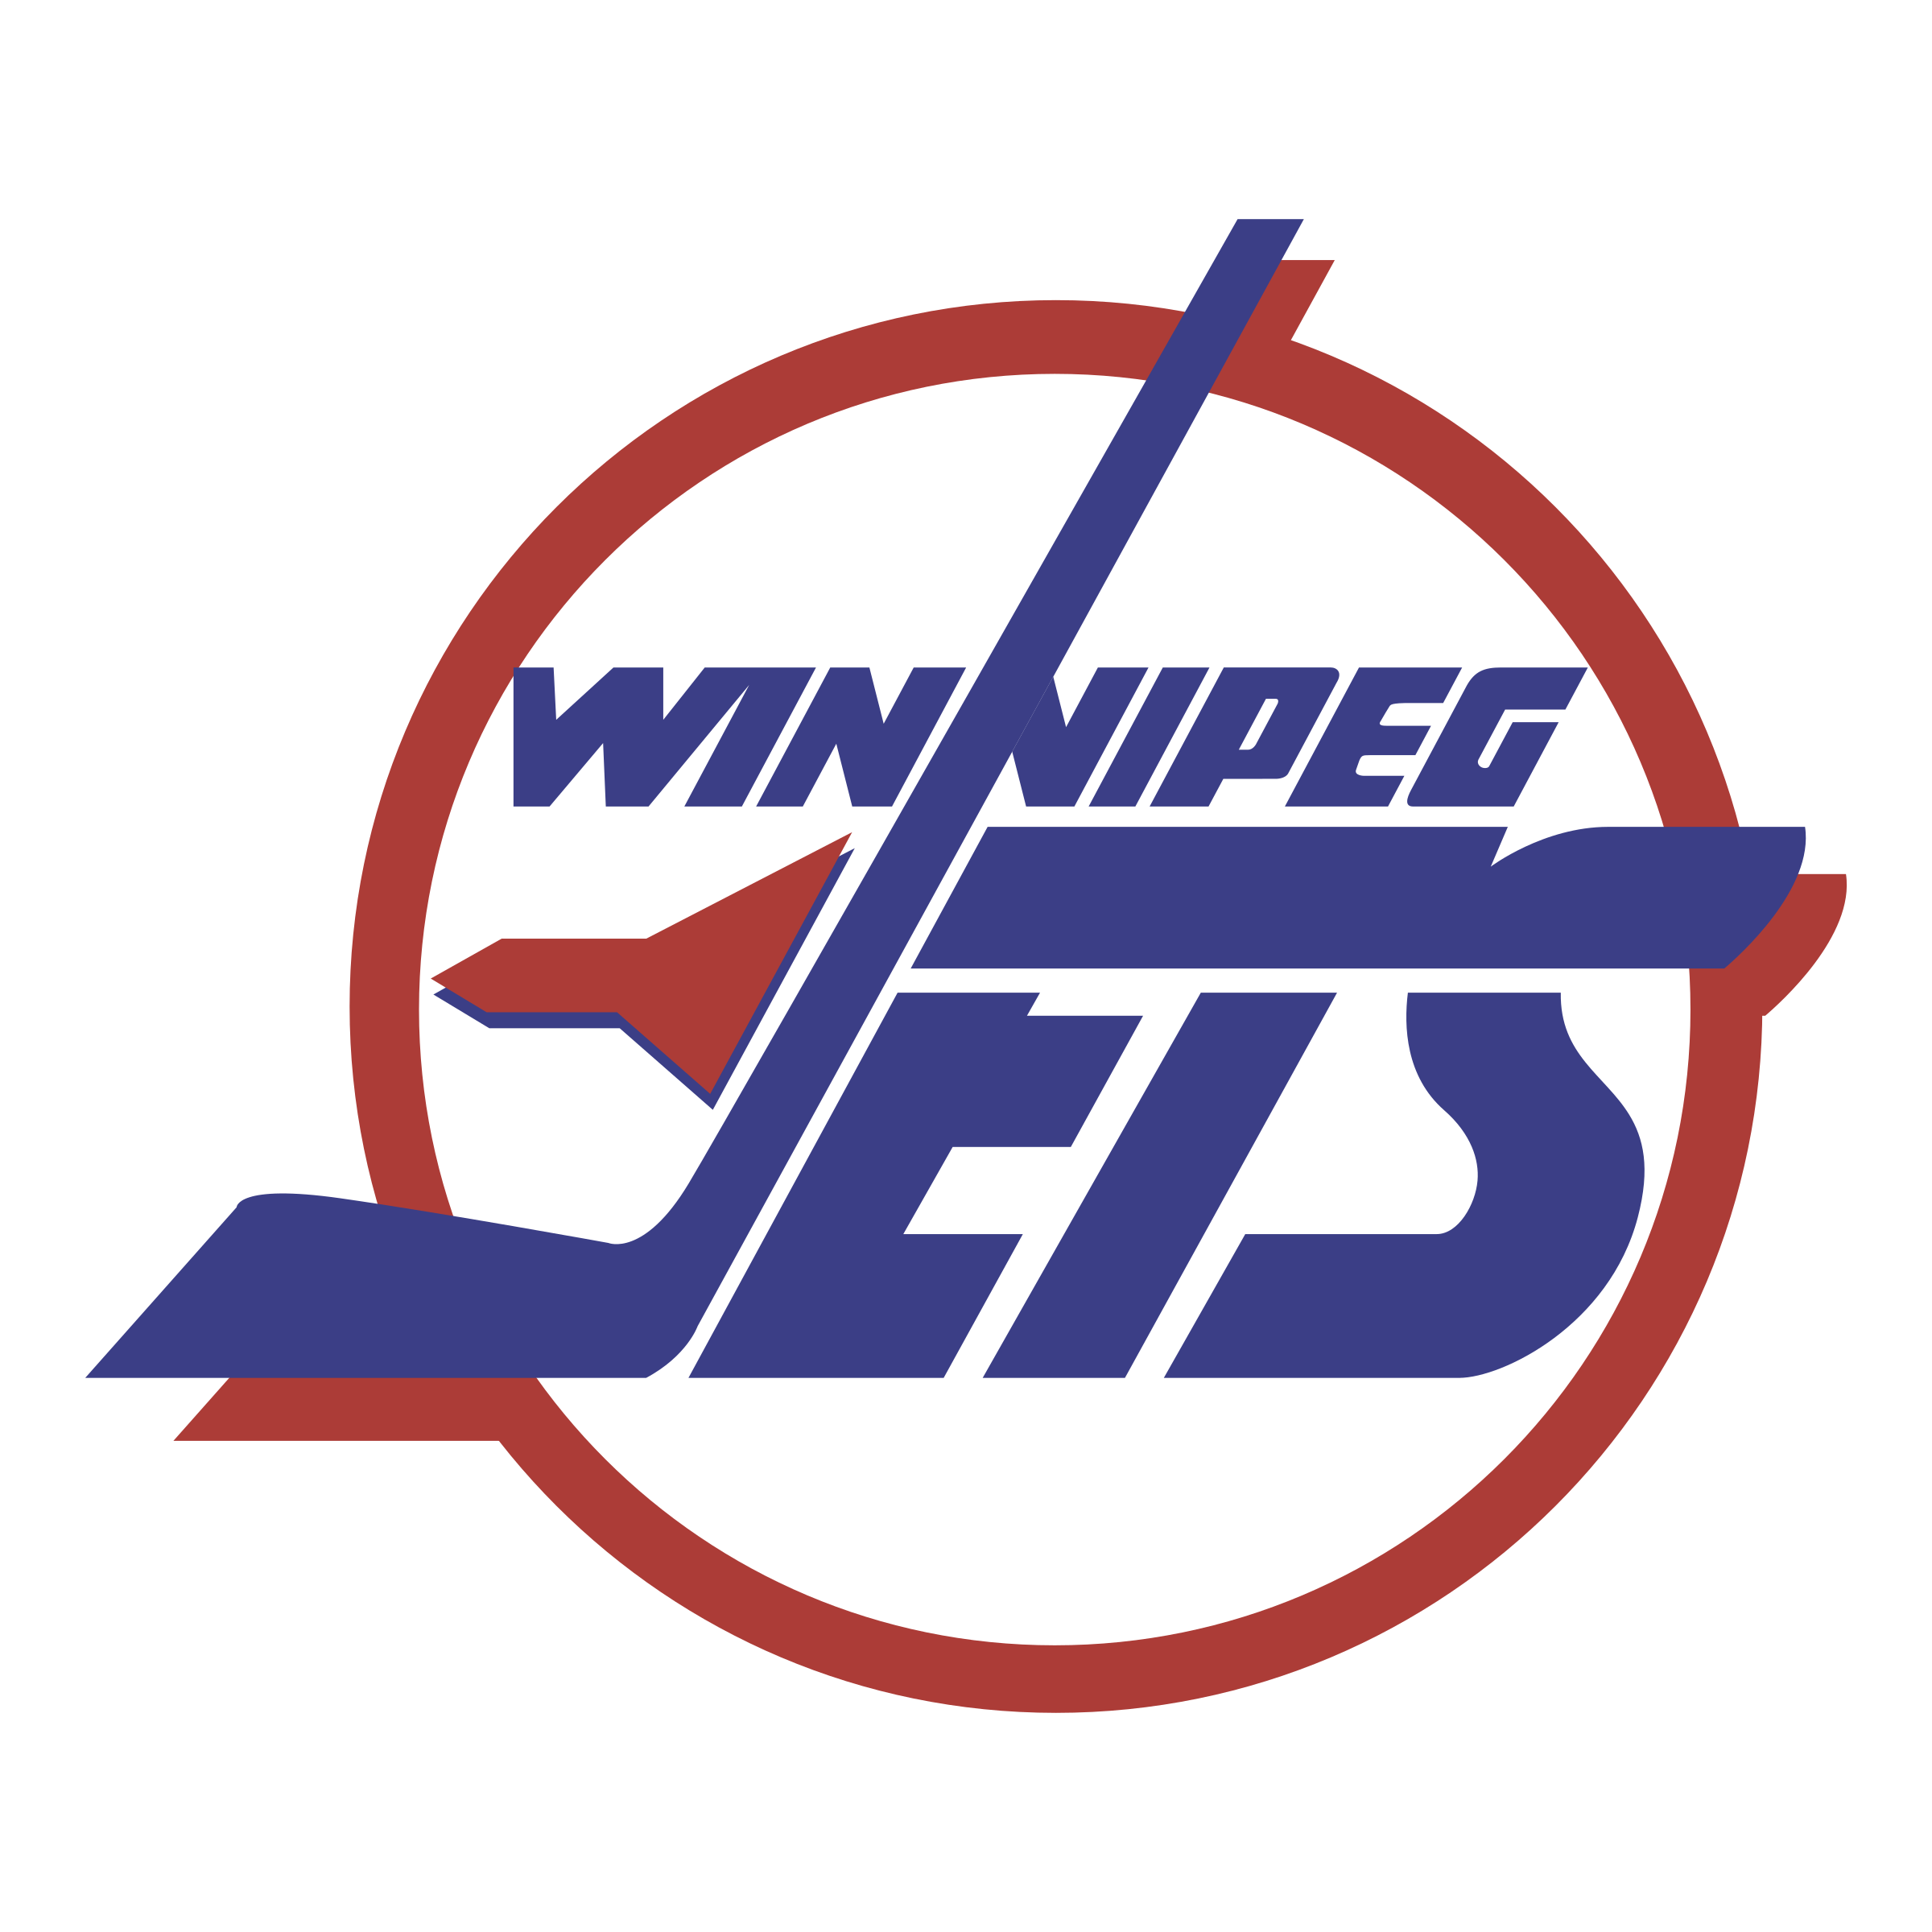 Winnipeg jets logo png. Jet clipart svg